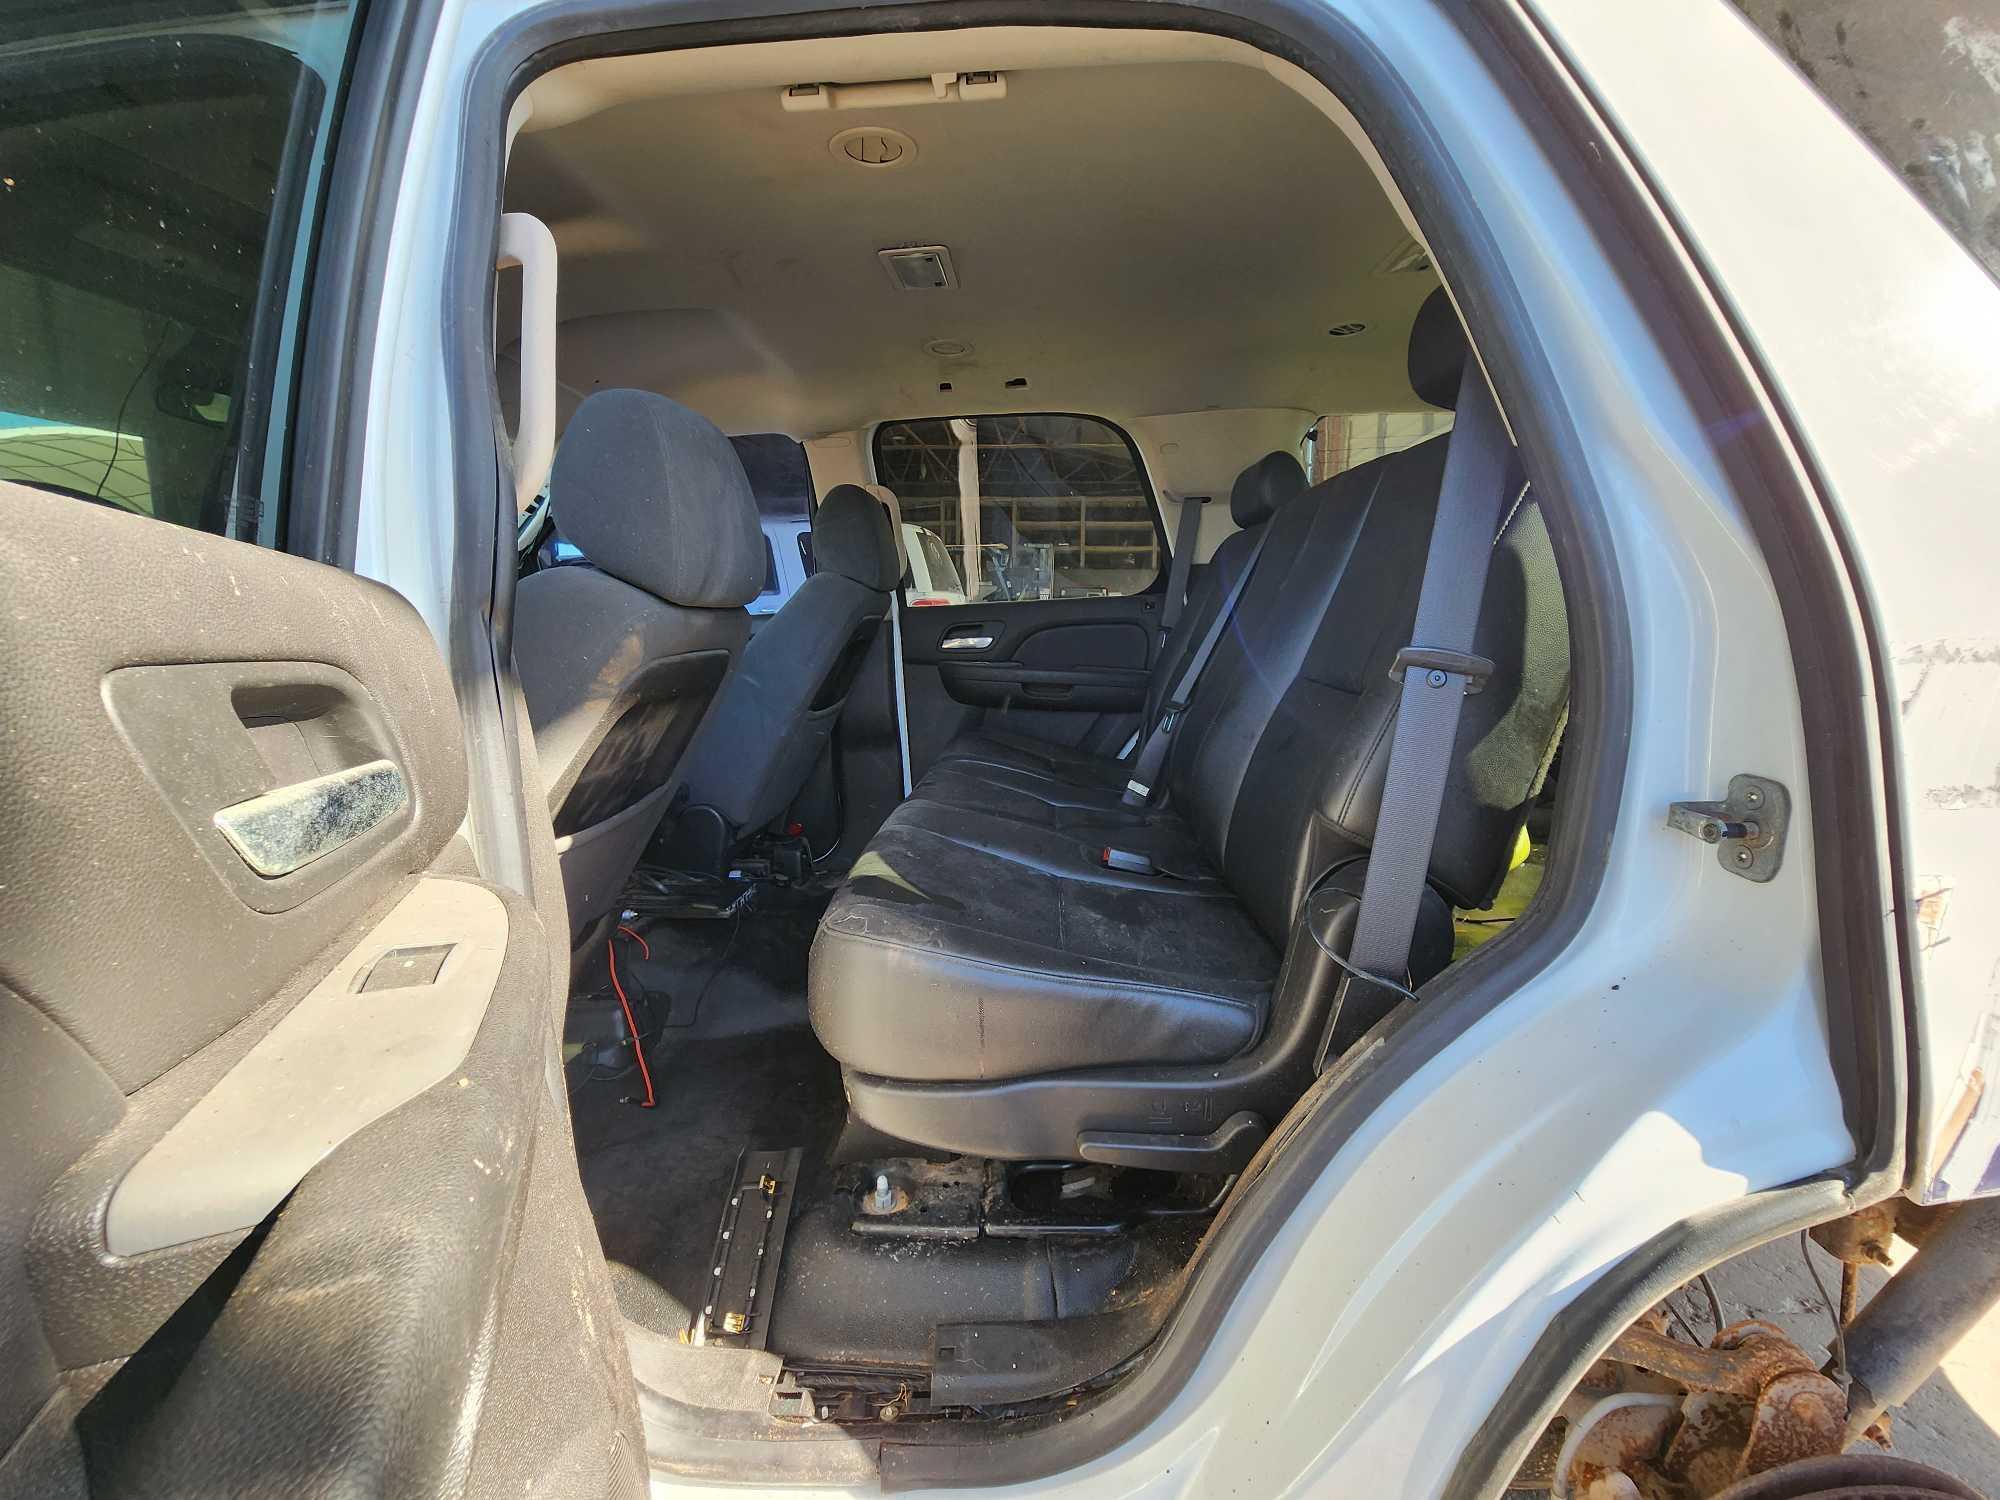 2009 Chevrolet Tahoe Multipurpose Vehicle (MPV), VIN # 1GNEC03049R178938